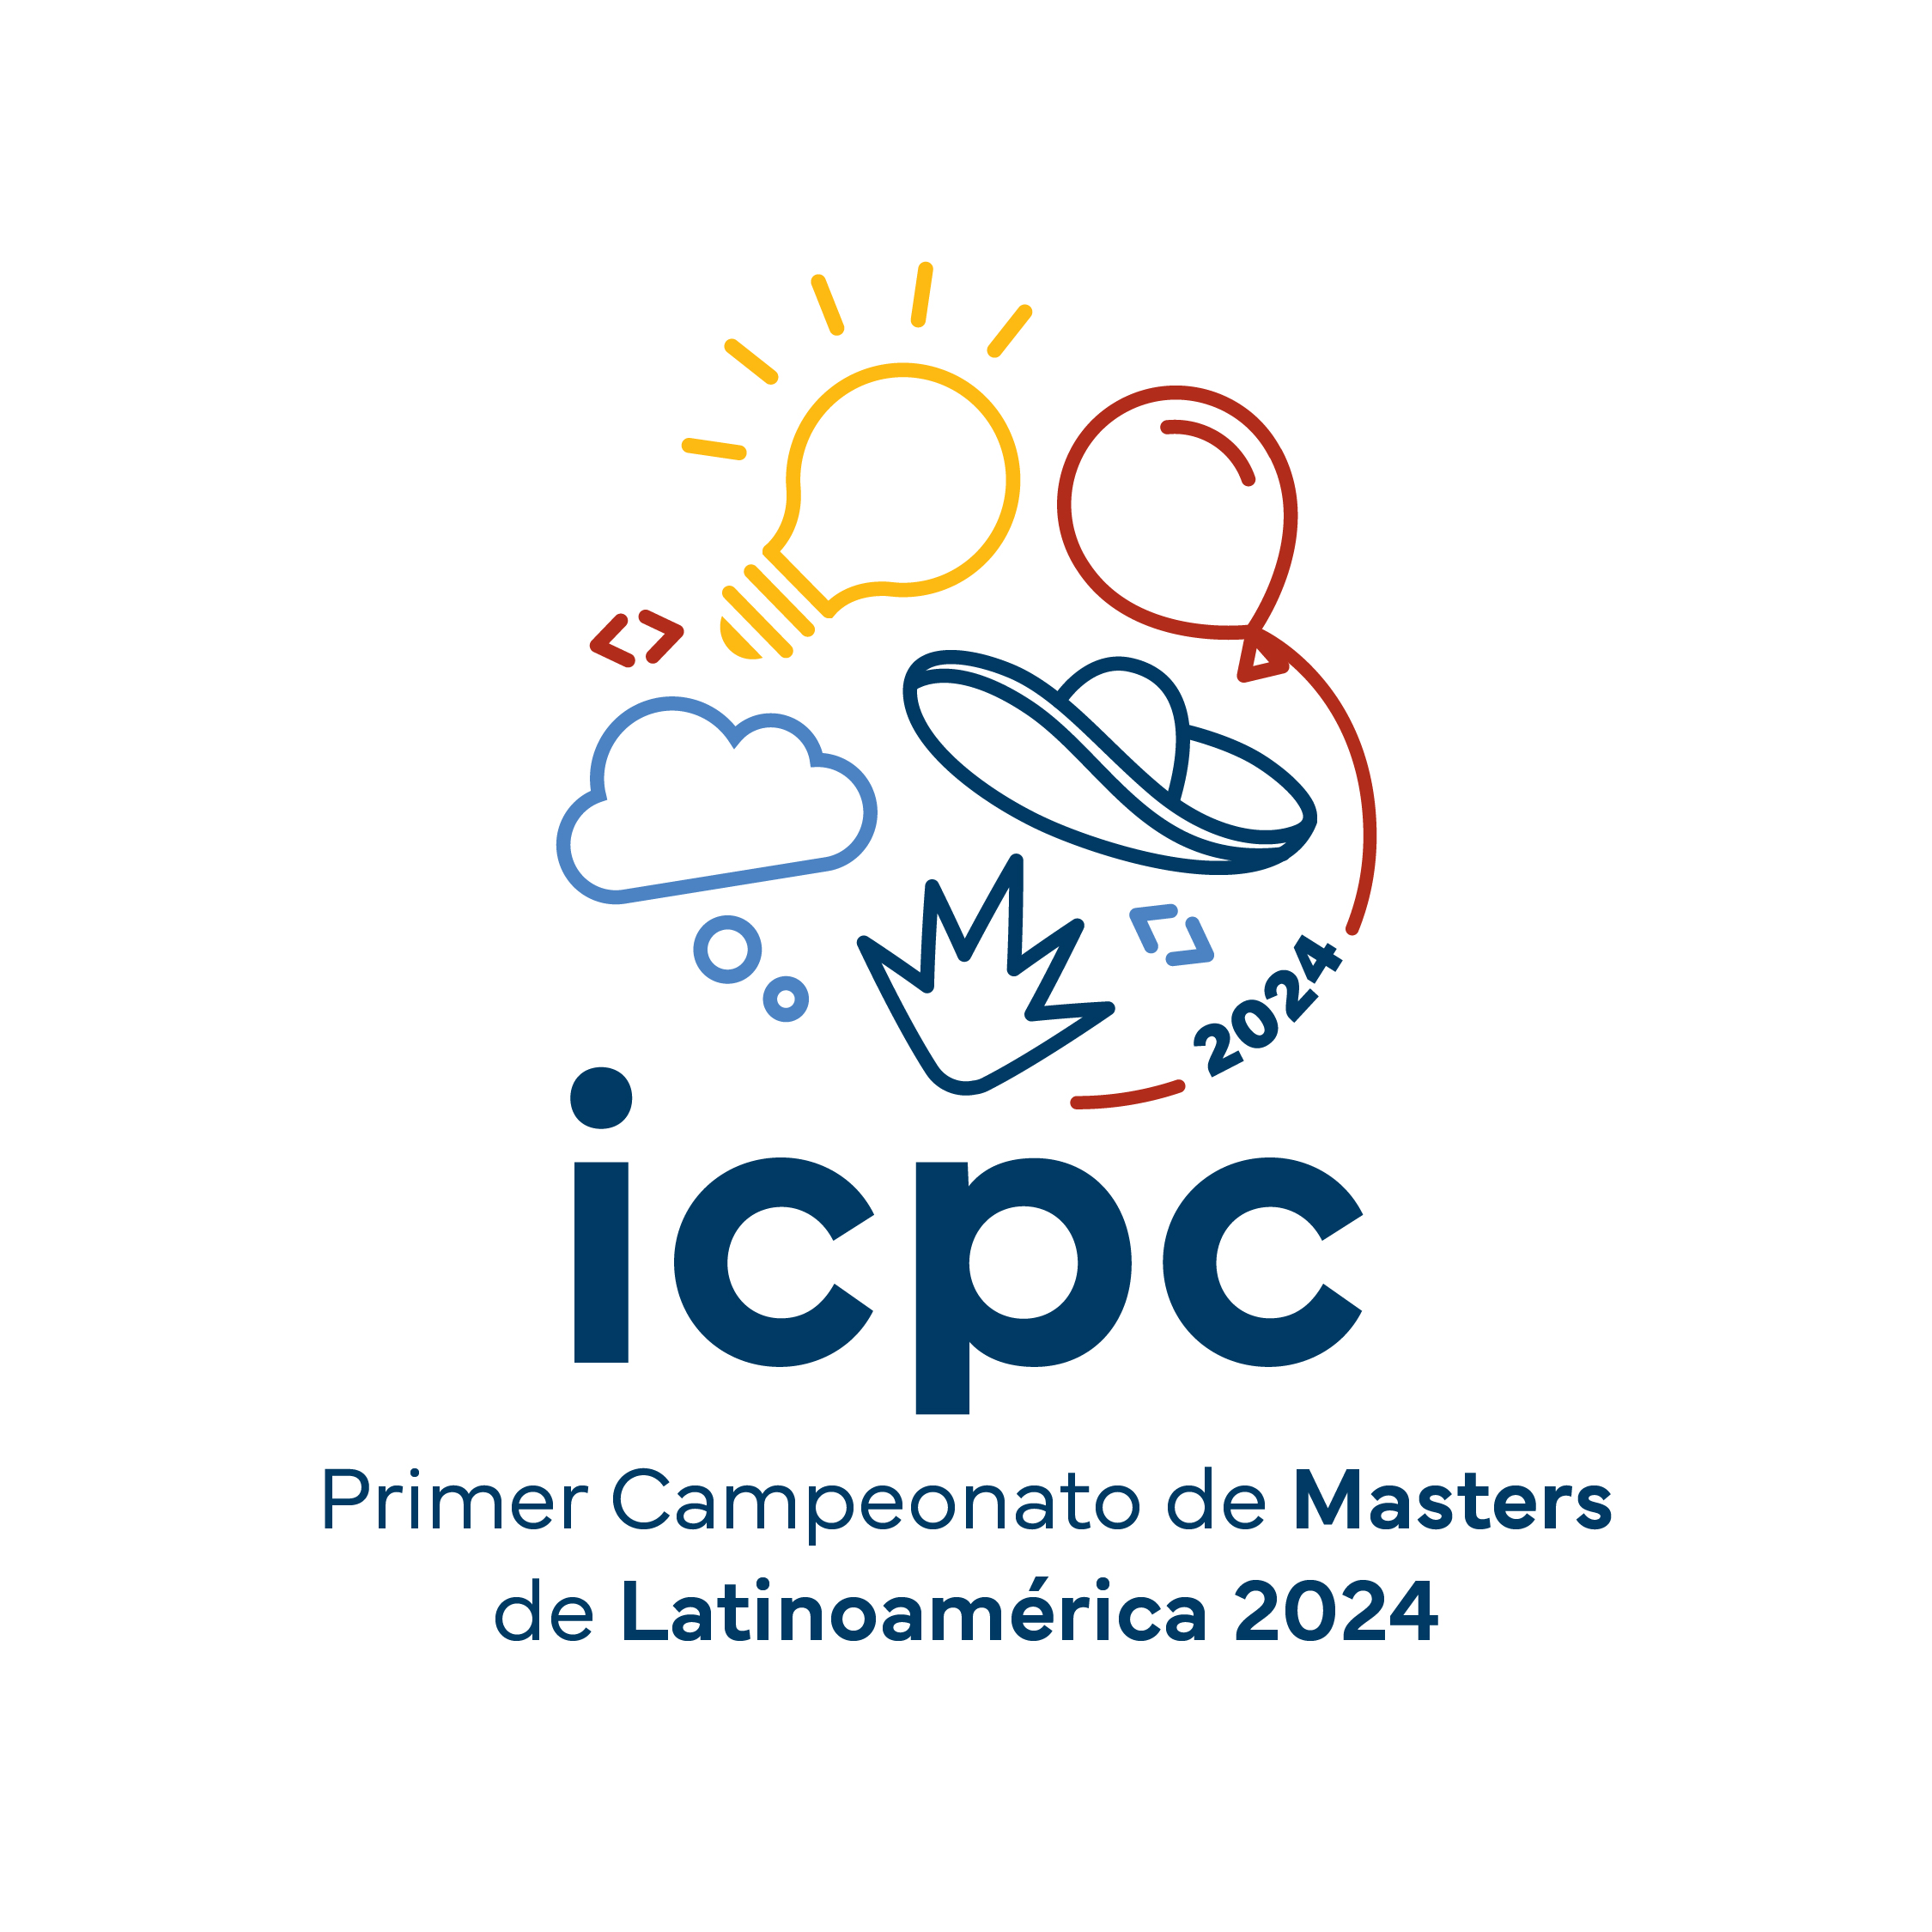 The ICPC International Collegiate Programming Contest